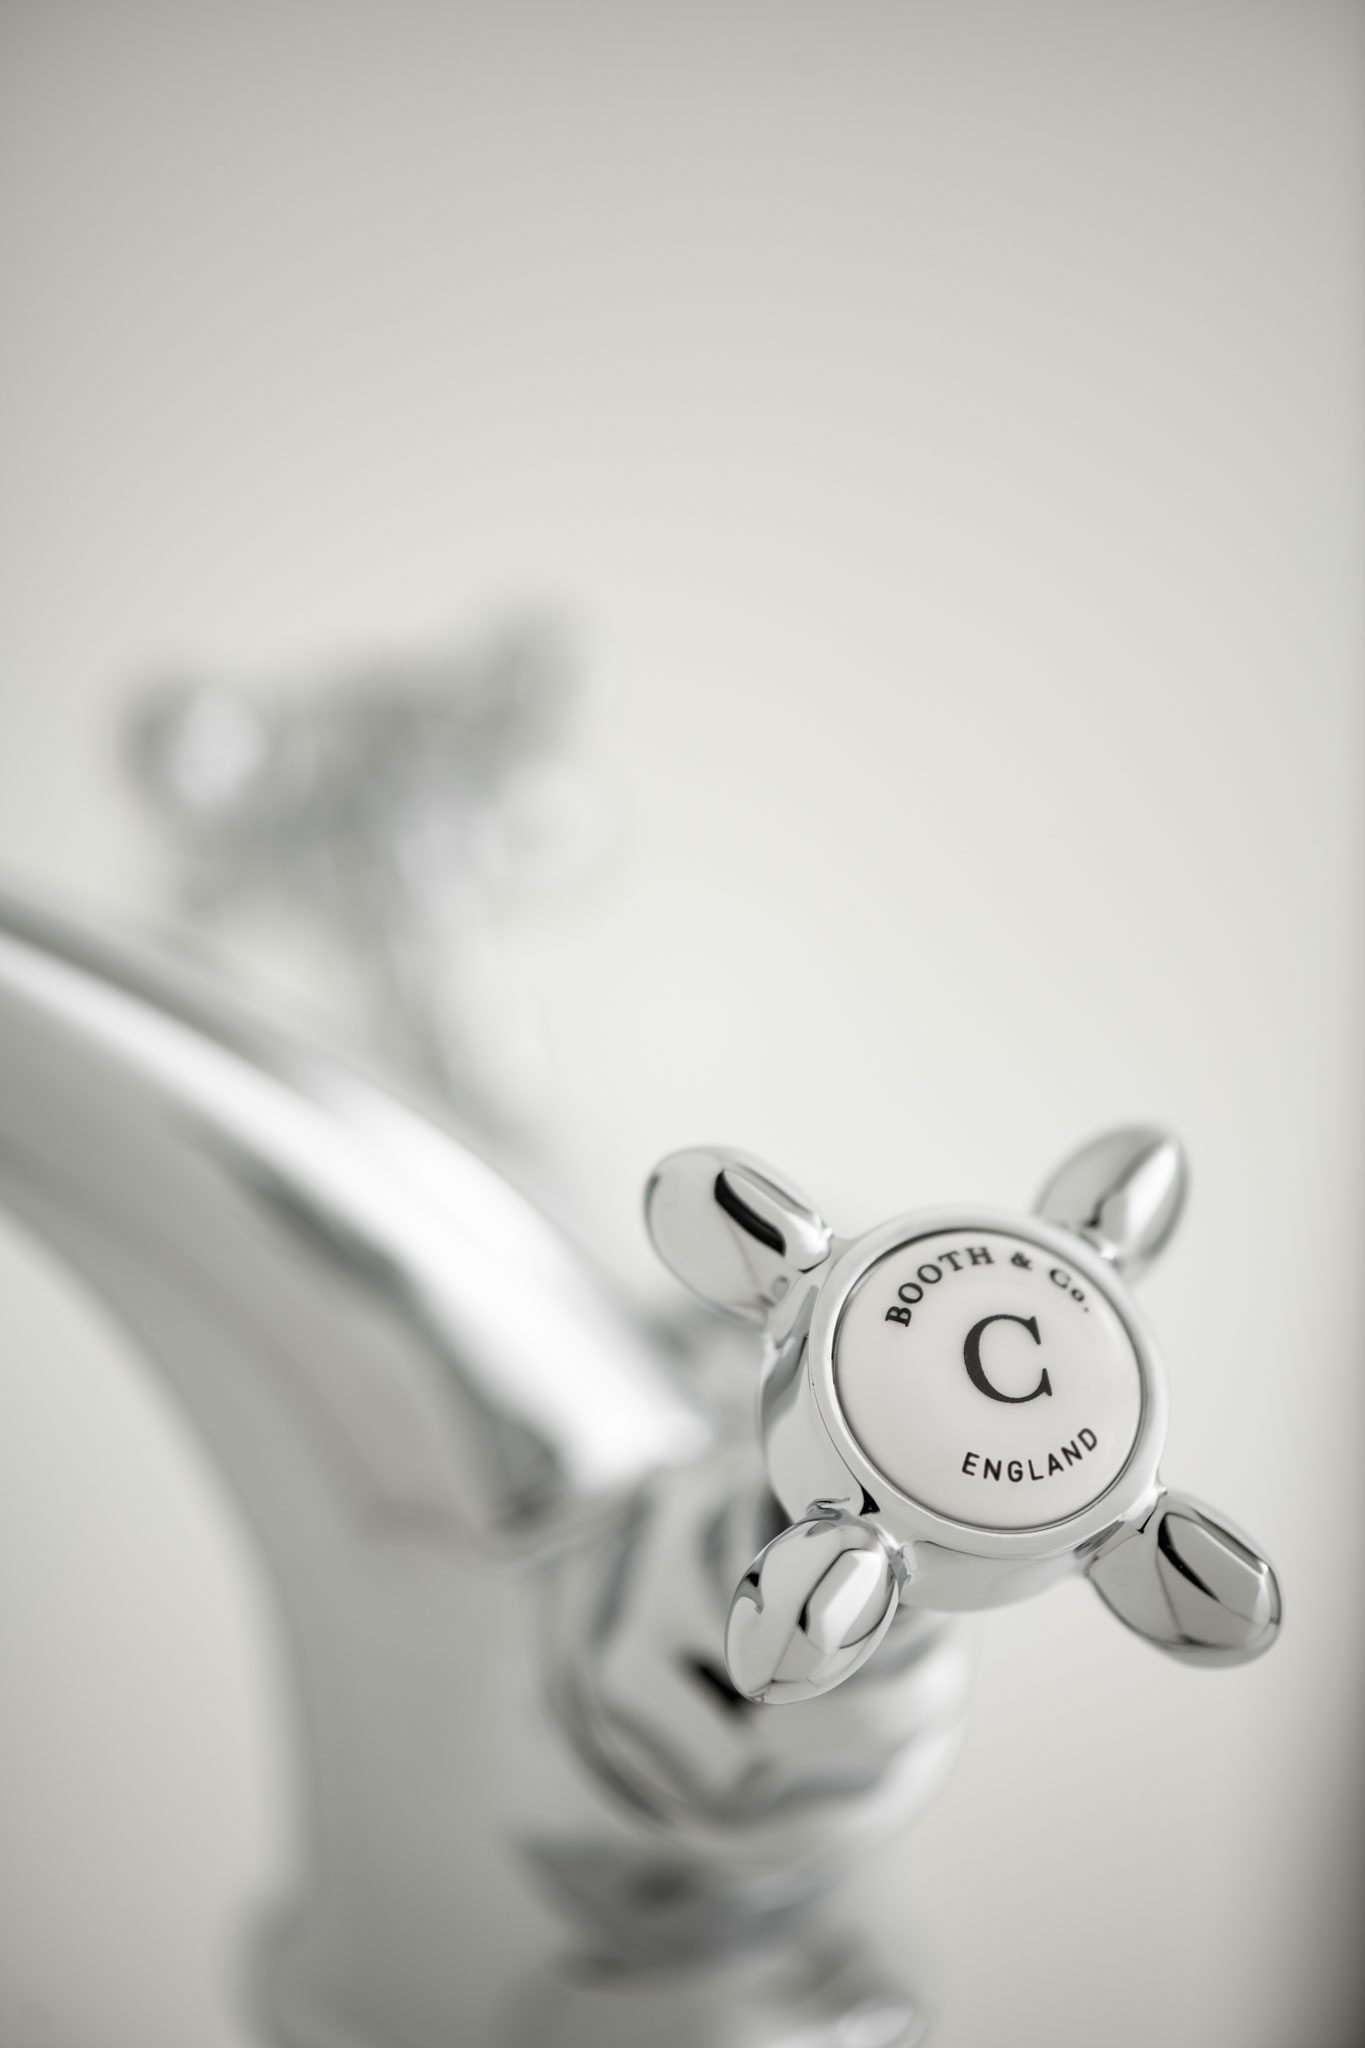 Traditional basin mixer cold handle close up